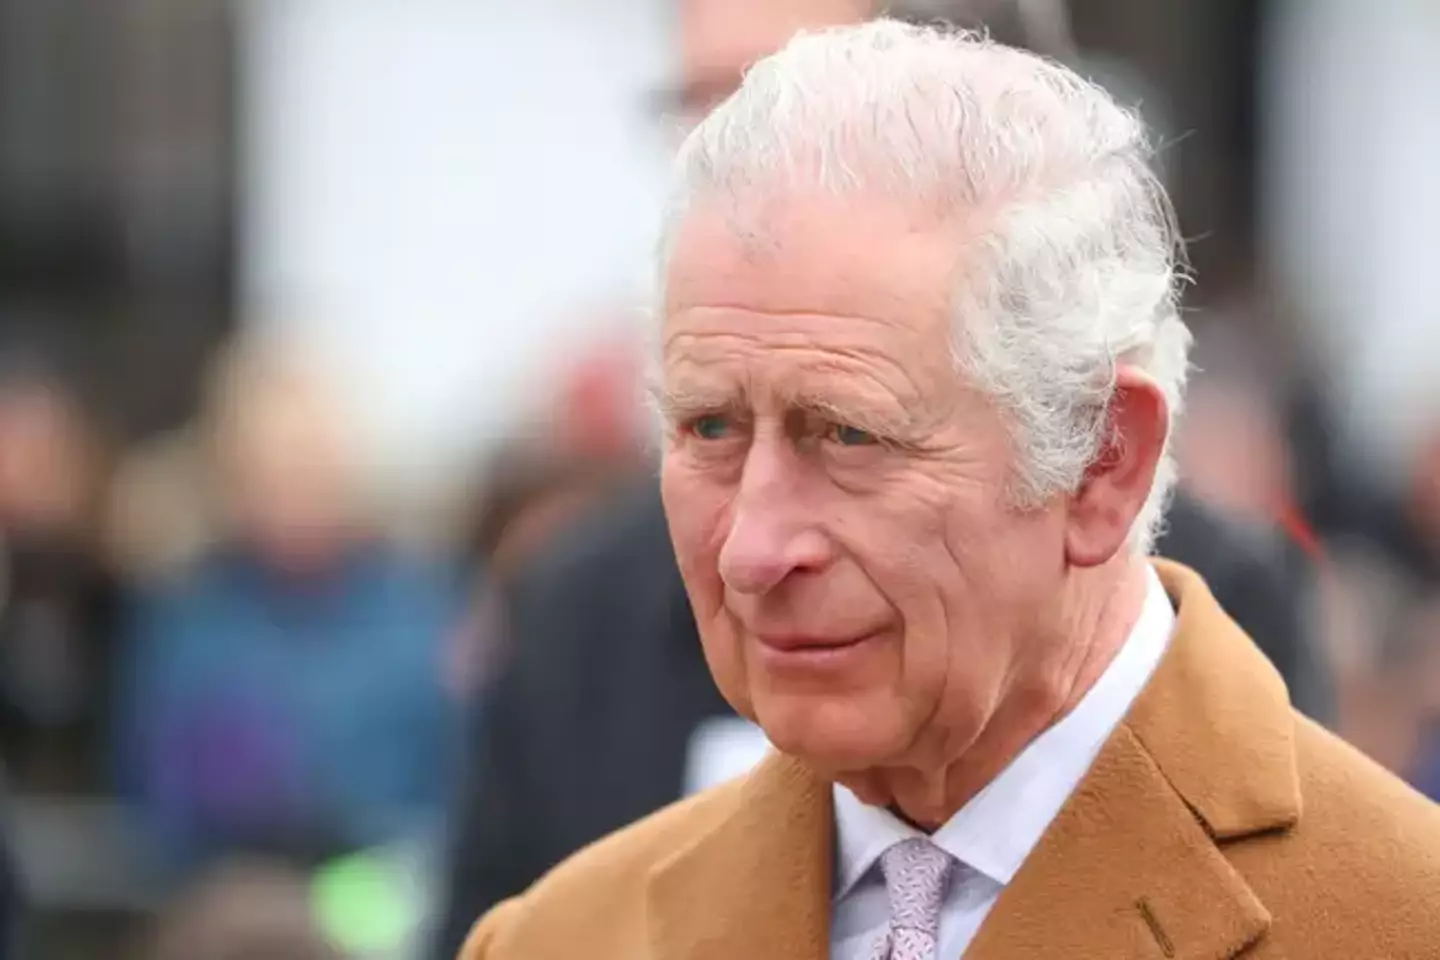 Prince Charles is now King Charles III.